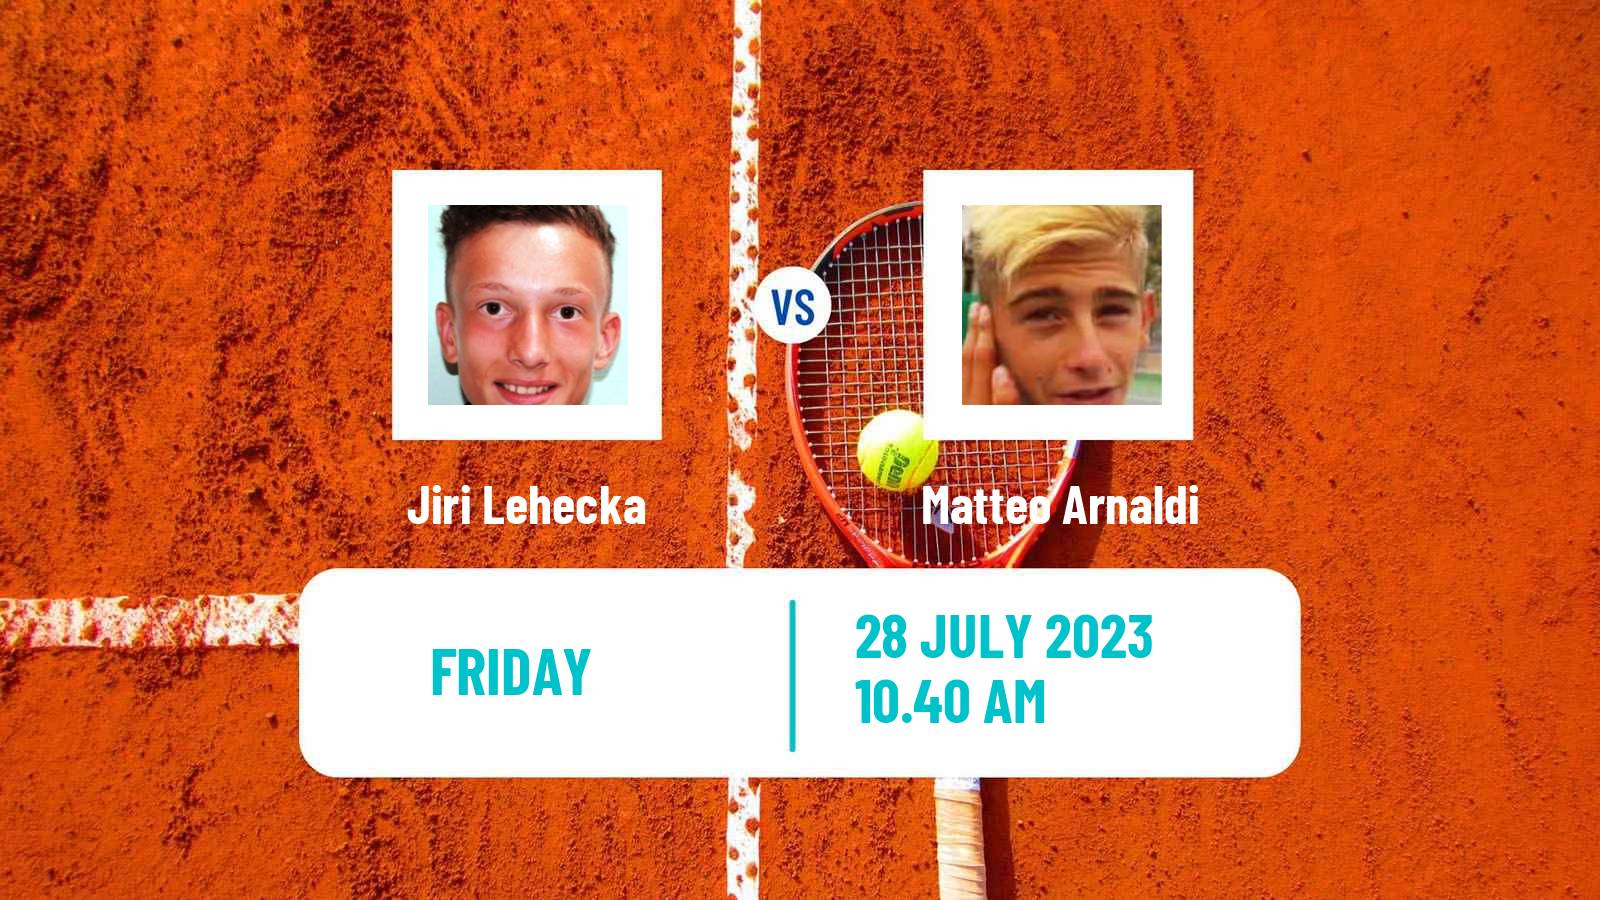 Tennis ATP Umag Jiri Lehecka - Matteo Arnaldi